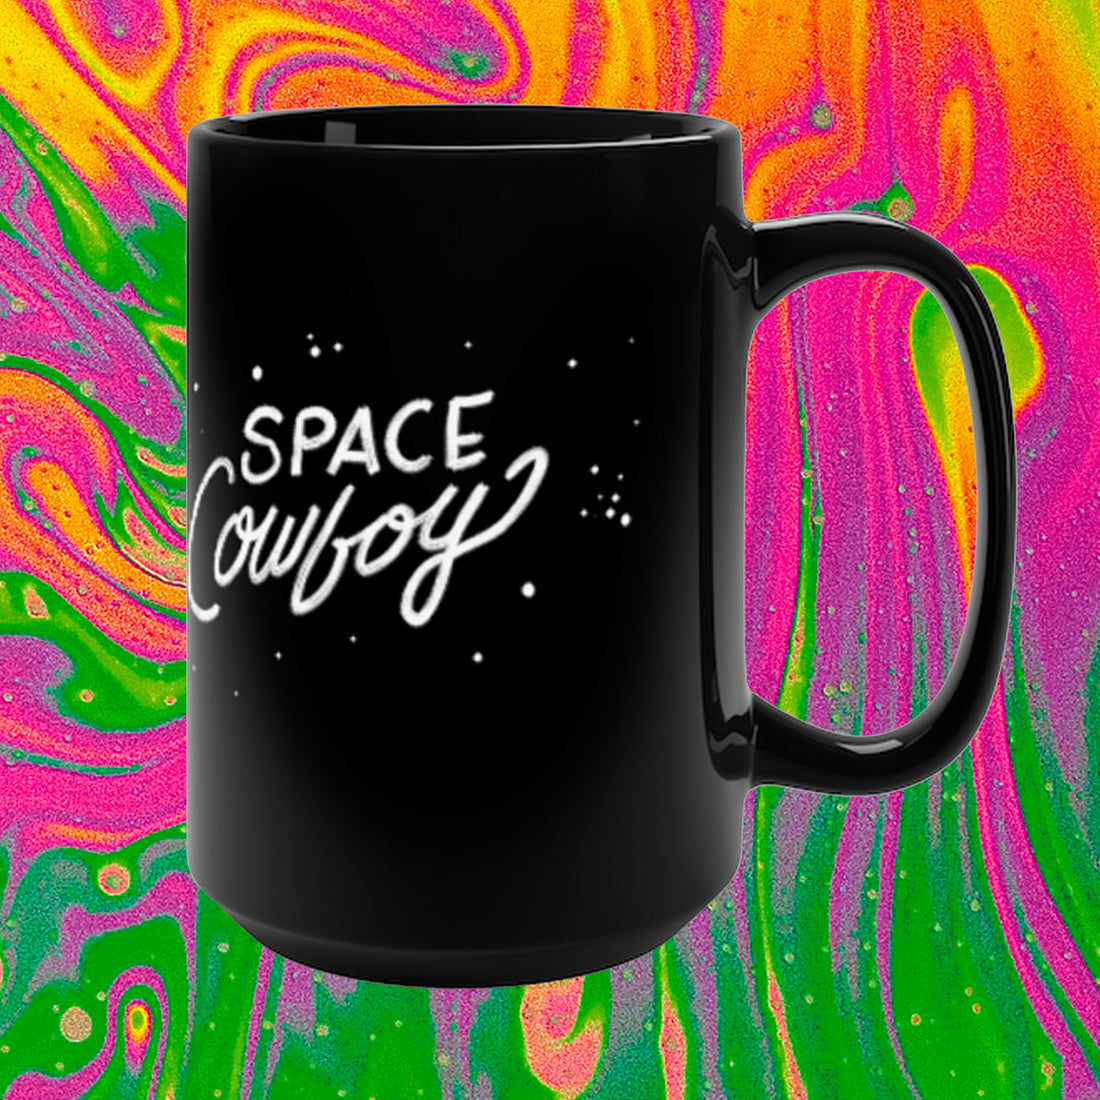 Space Cowboy 15oz Mug